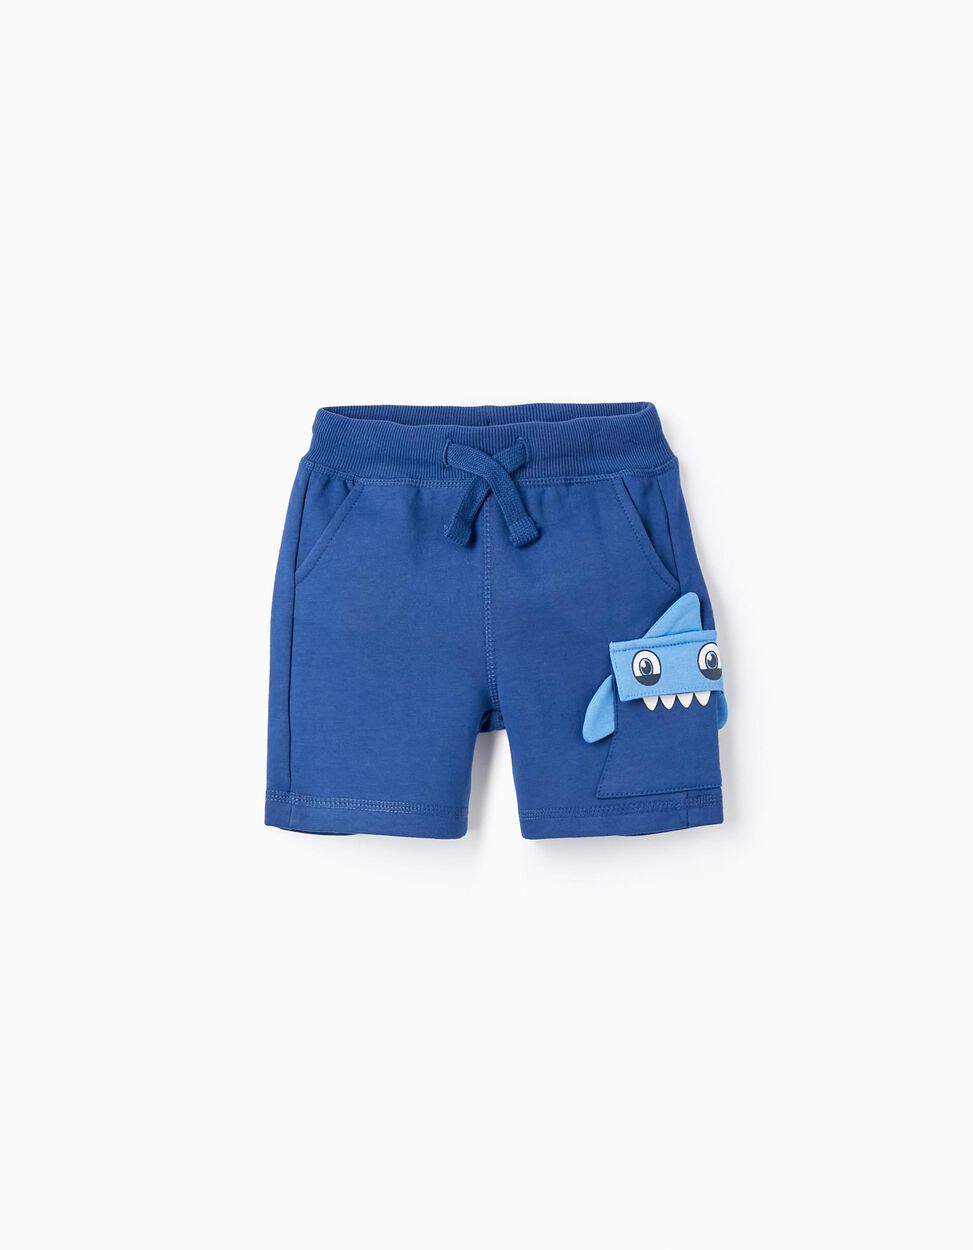 Buy Online Cotton Shorts for Baby Boys 'Shark', Dark Blue